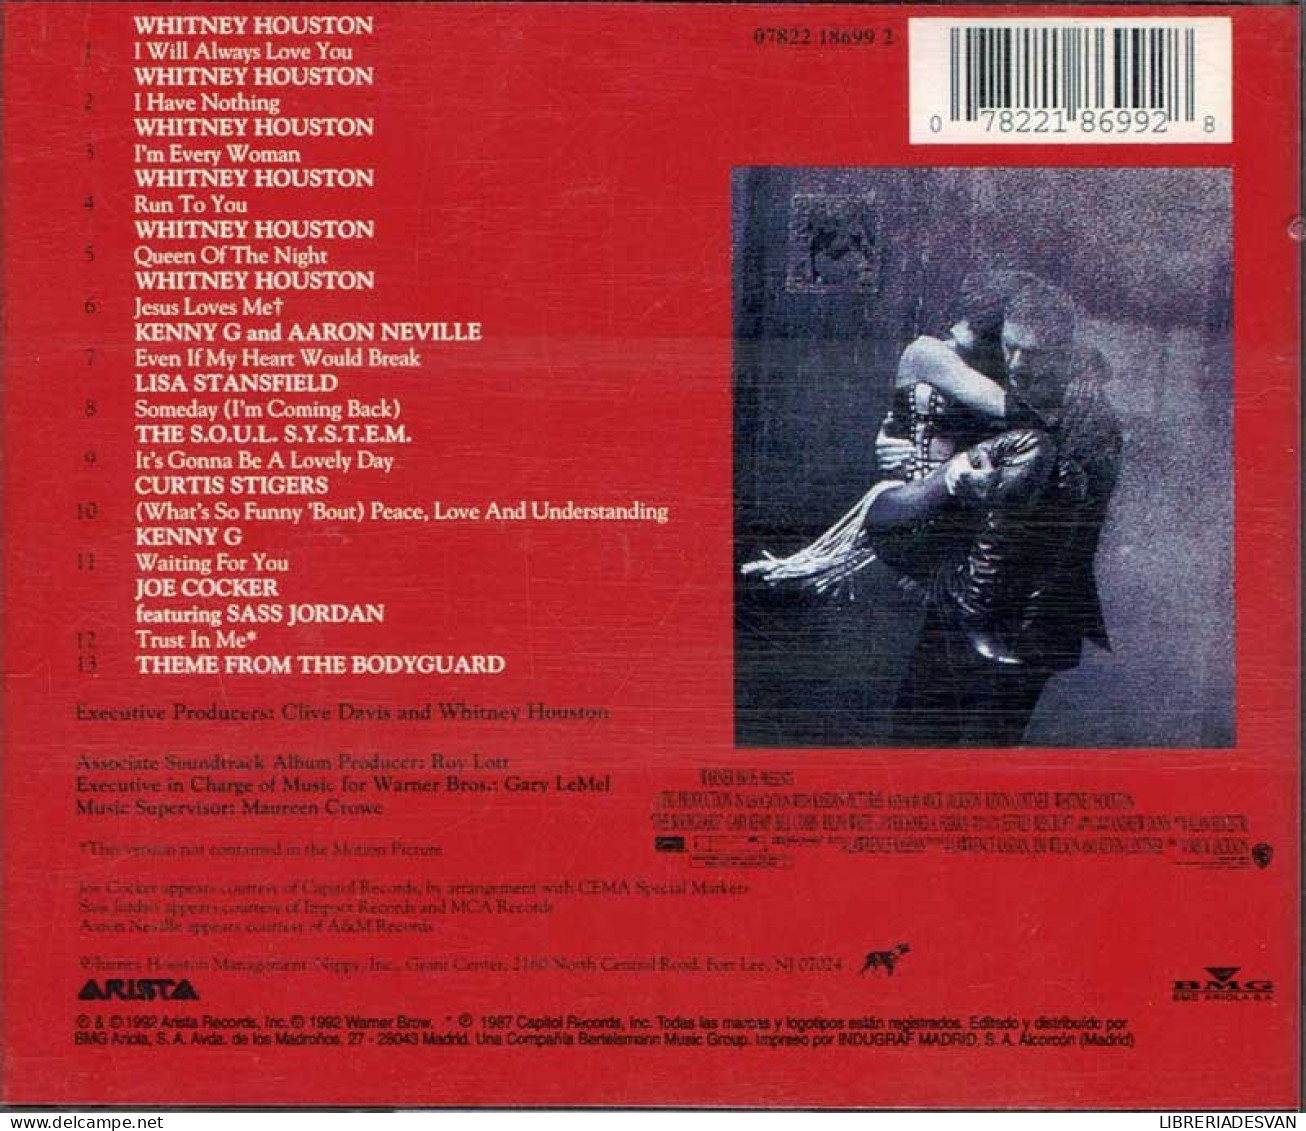 The Bodyguard (Original Soundtrack Album). CD - Musica Di Film